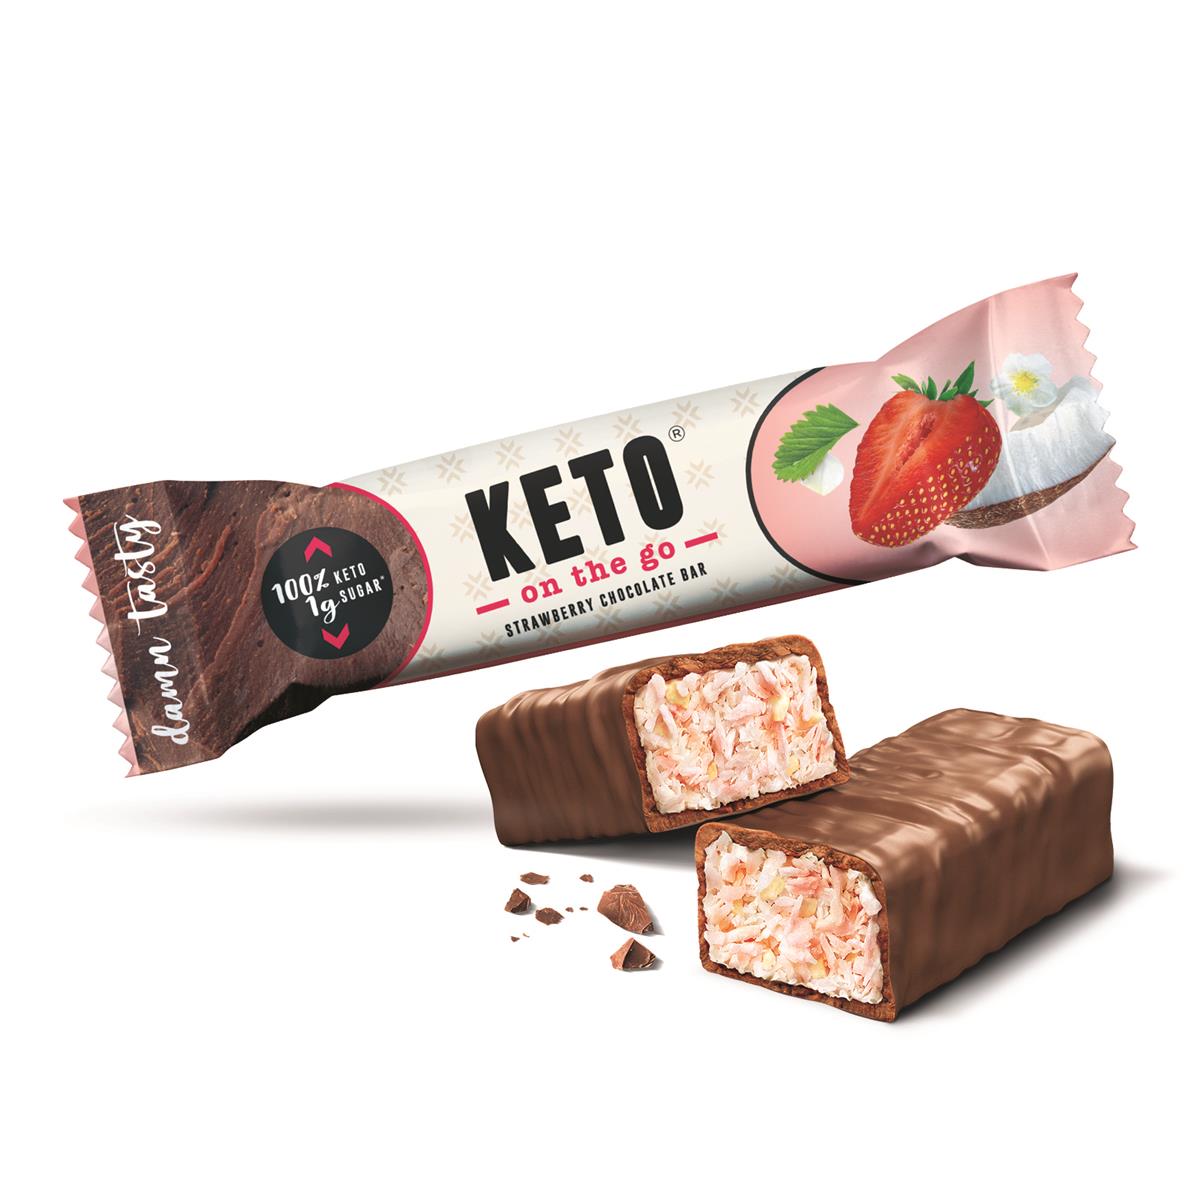 KETO on the go Strawberry Chocolate Bar_EUR 1,49_1